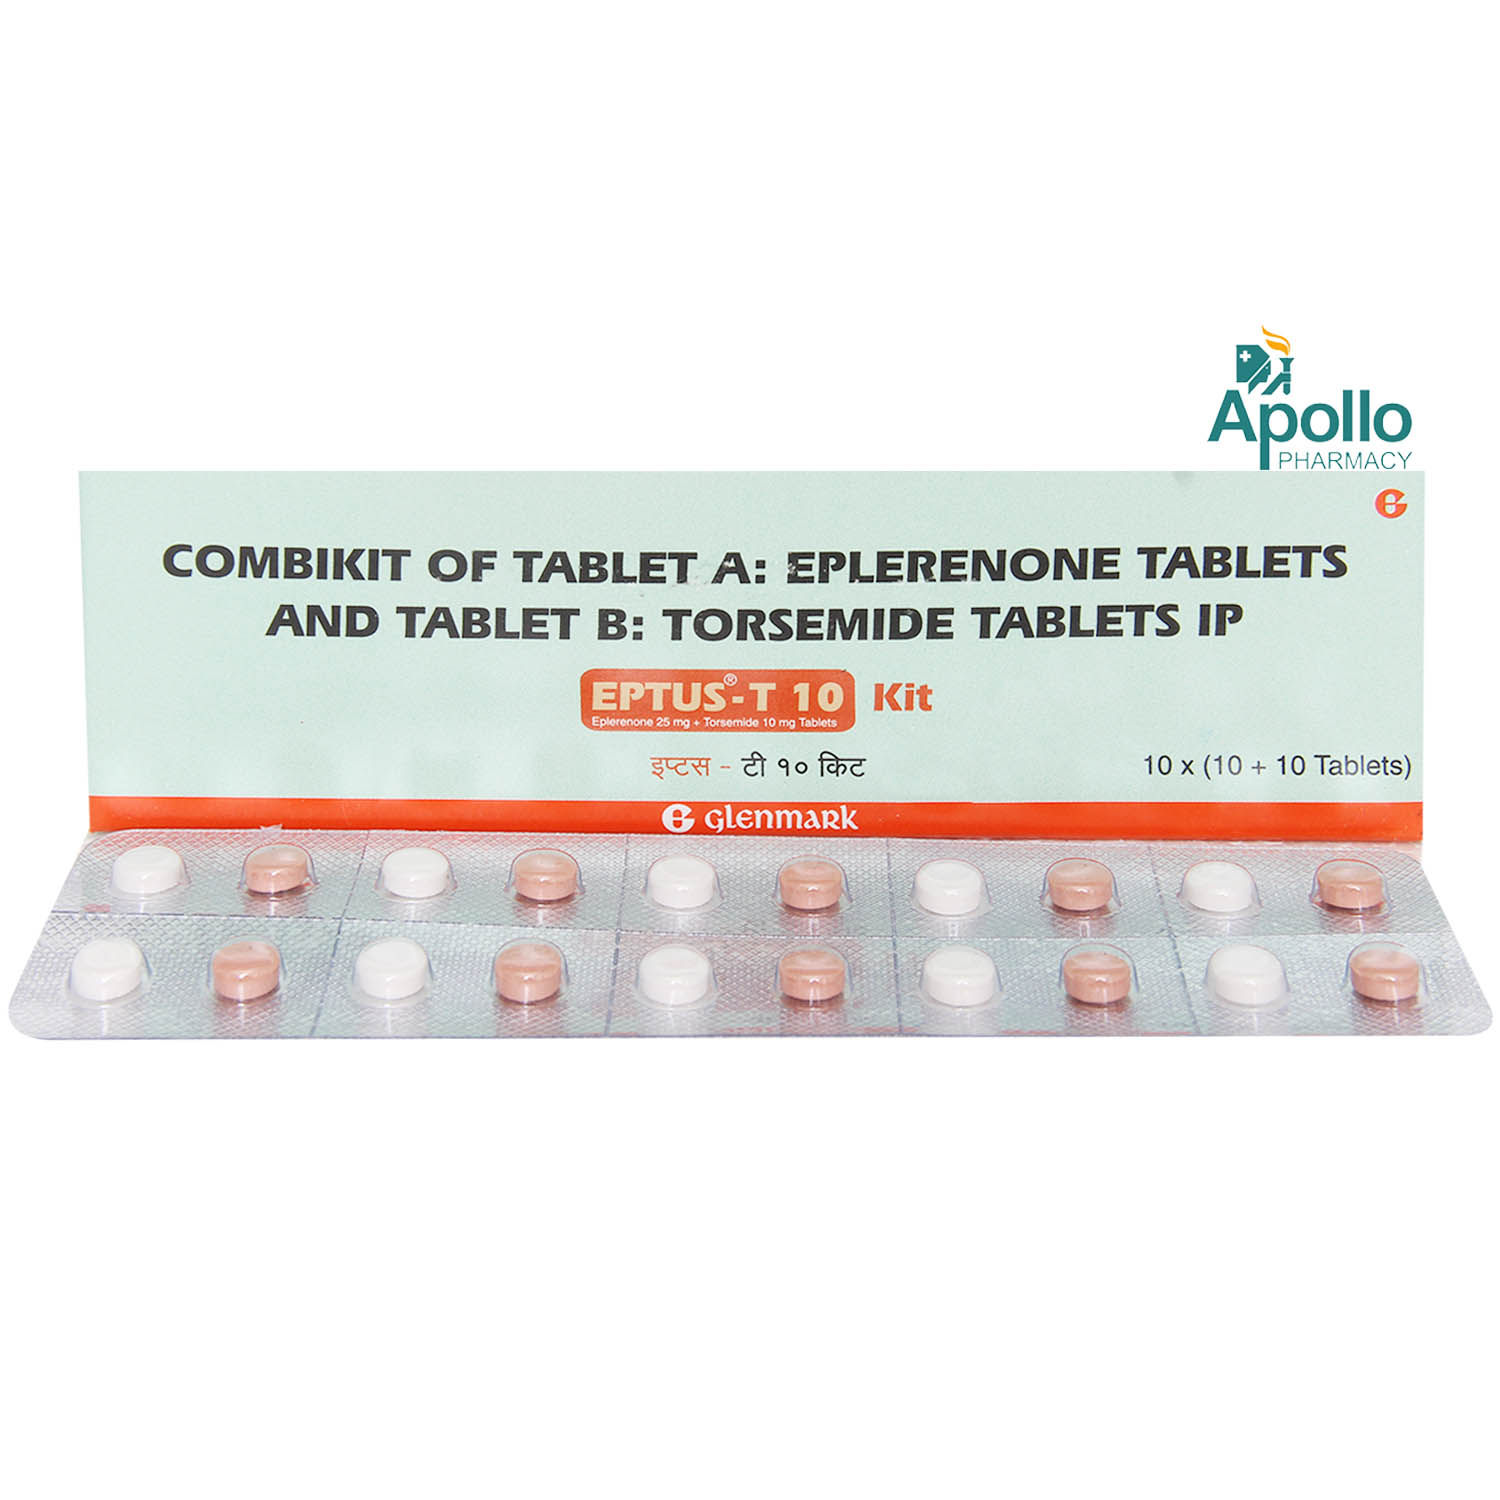 Eptus-T 10 Kit 1's, Pack of 1 Tablet